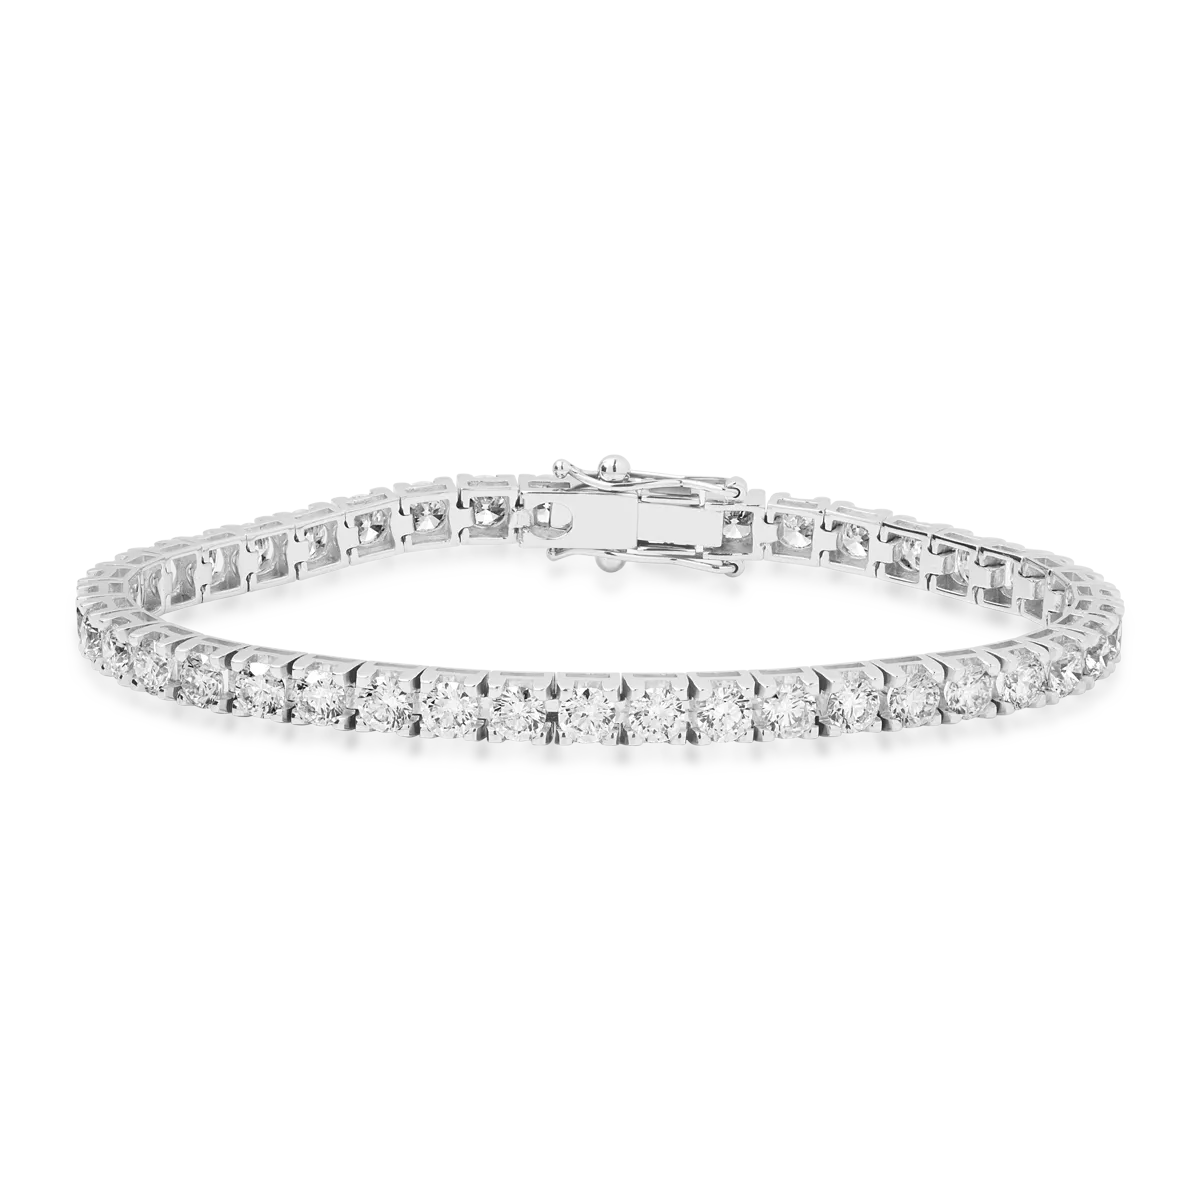 18K white gold tennis bracelet with 6.1ct diamonds